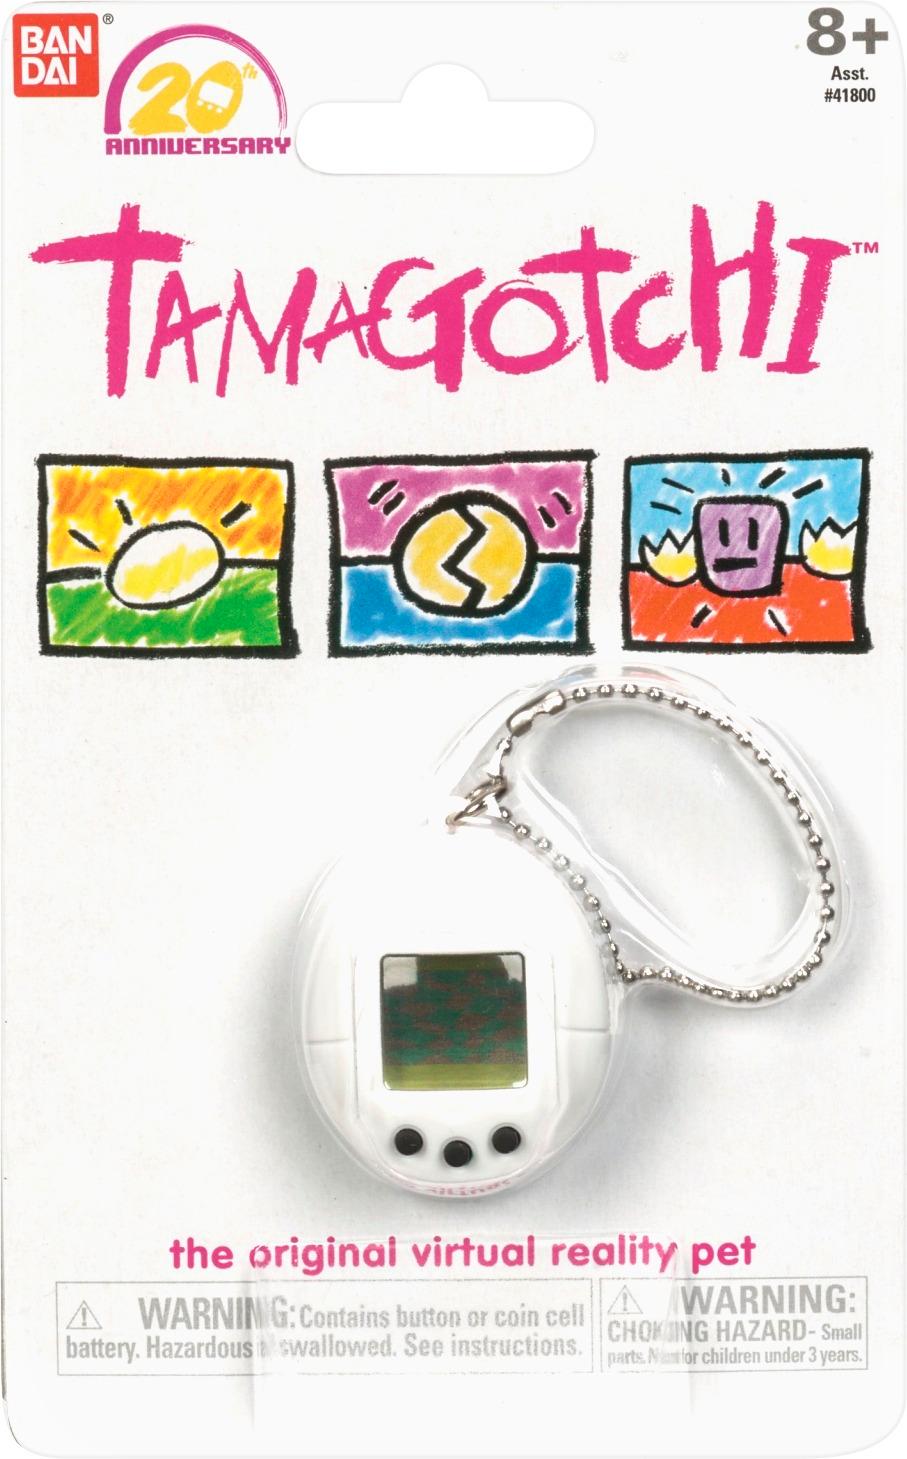 Best Buy: Bandai Tamagotchi Styles May Vary 41798